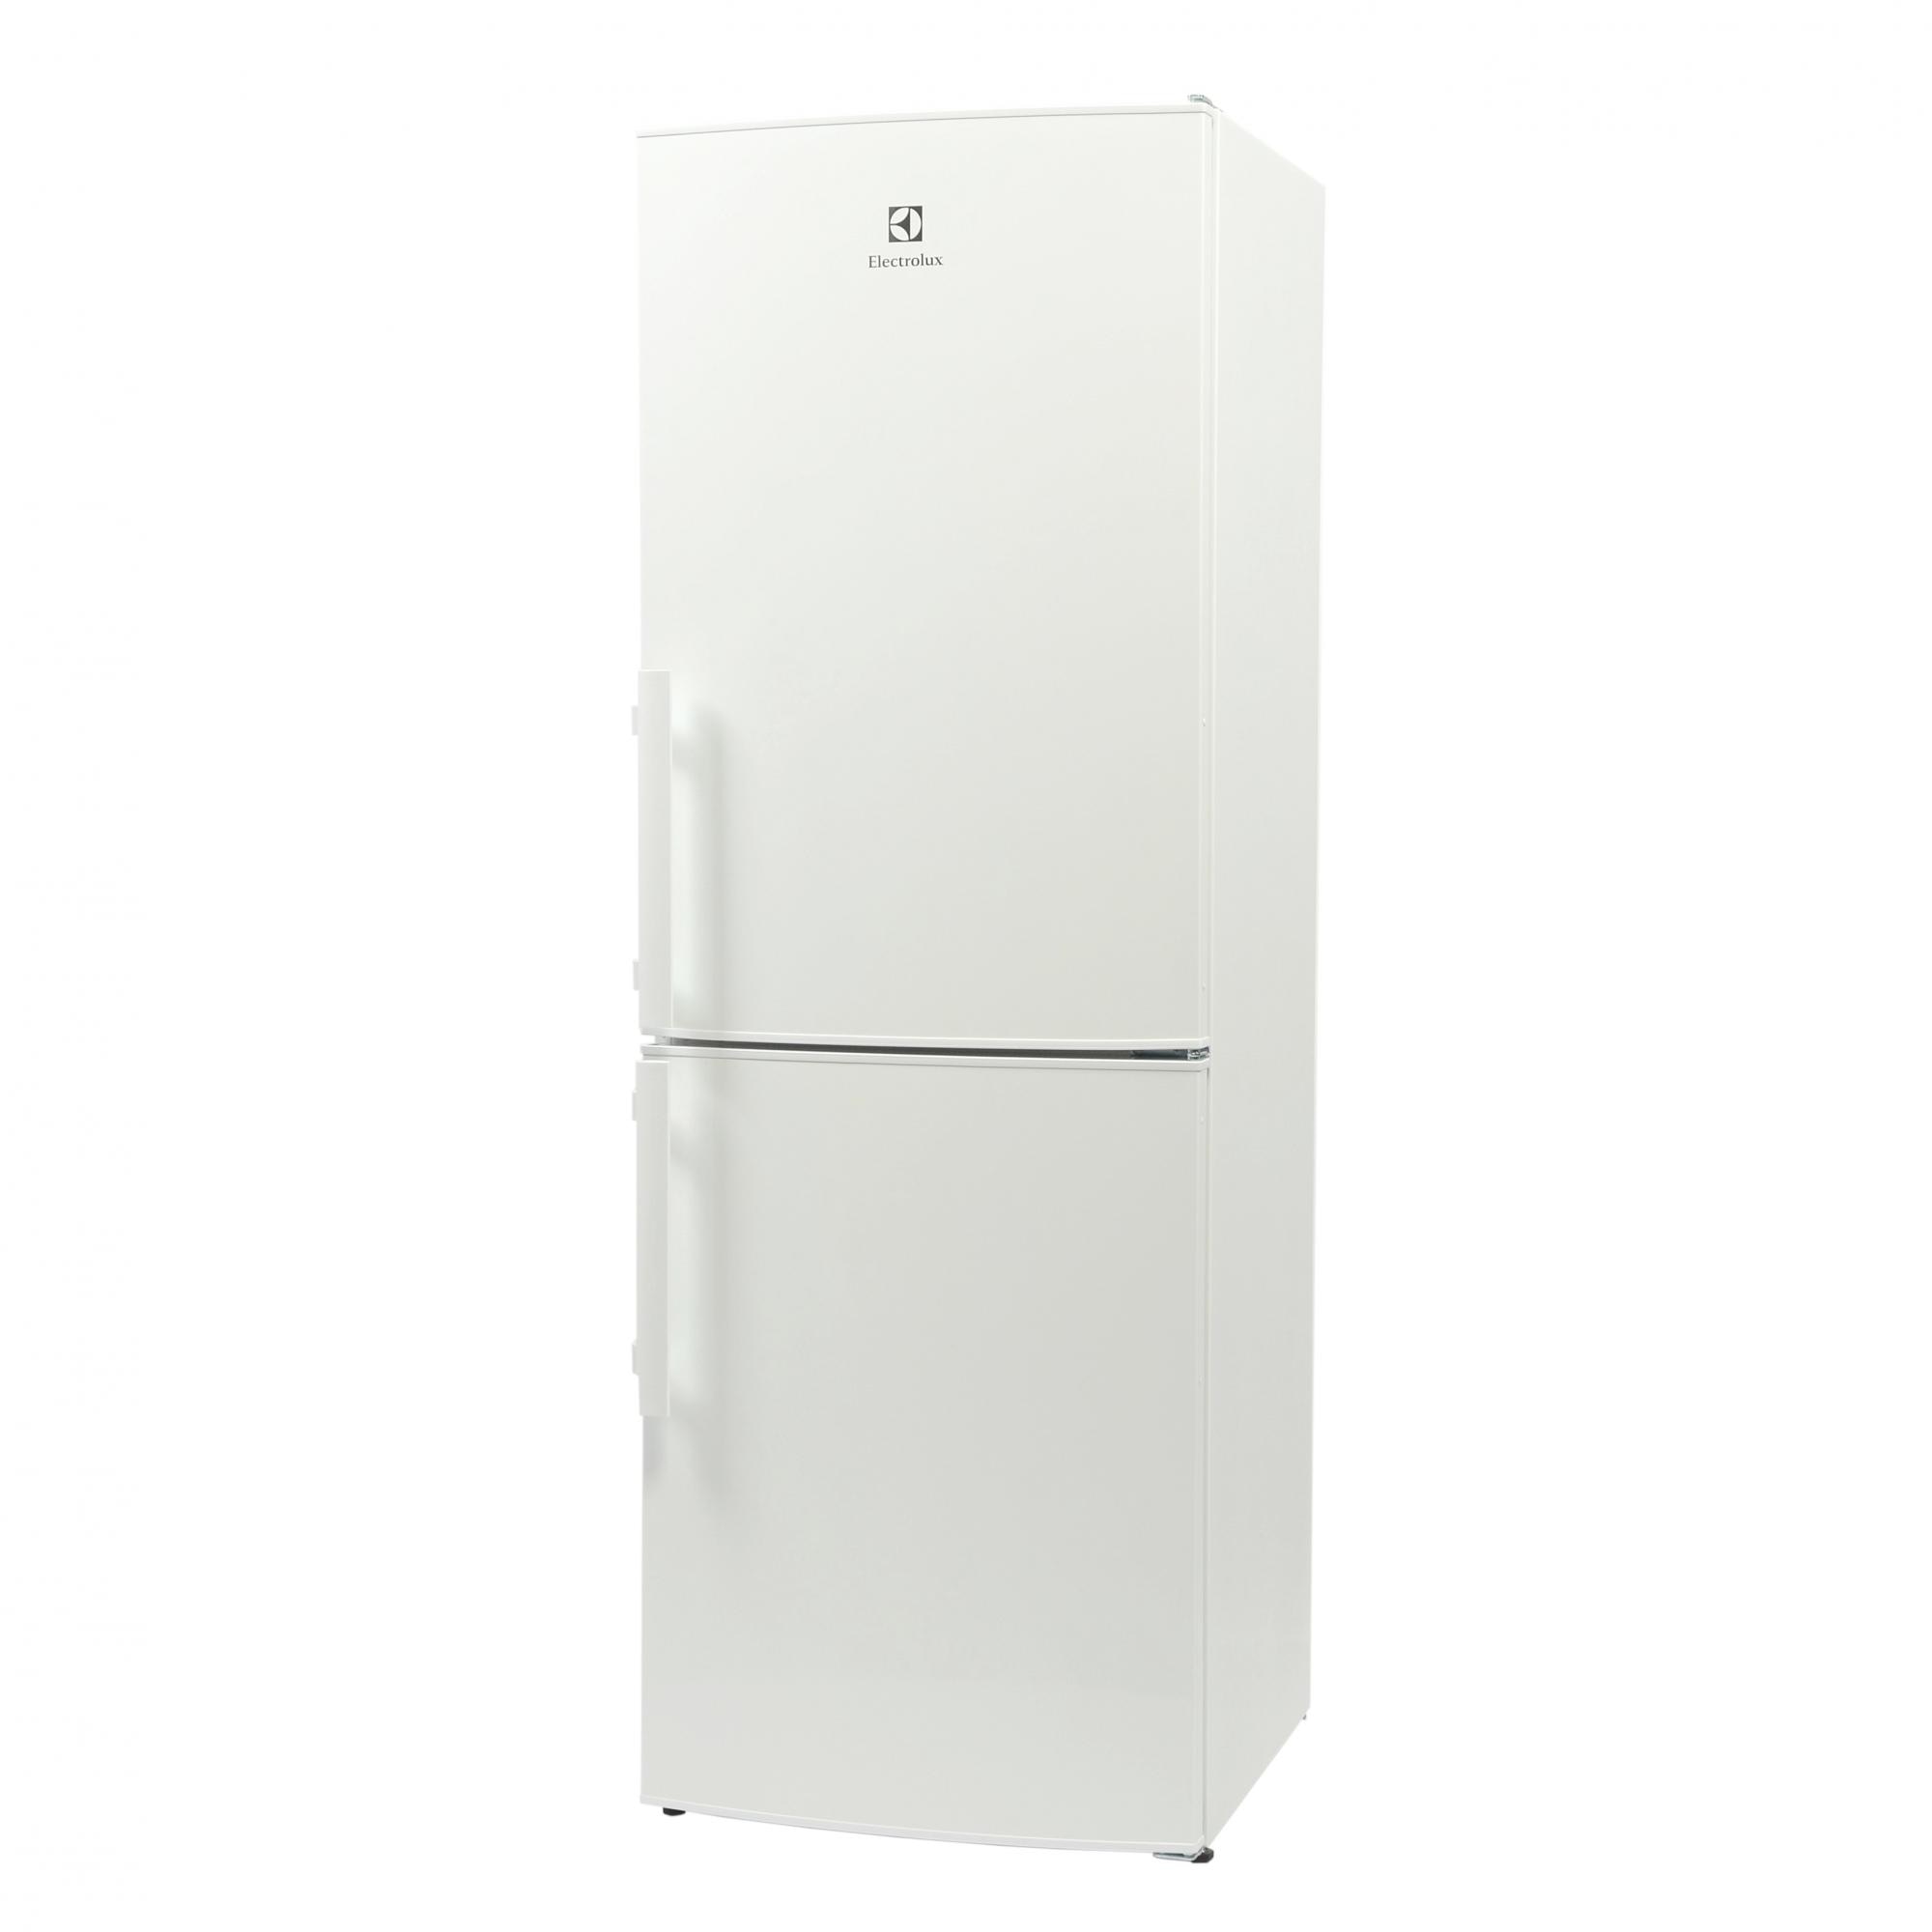 Хладилник Electrolux EN3201MOW с обем от 309 л.